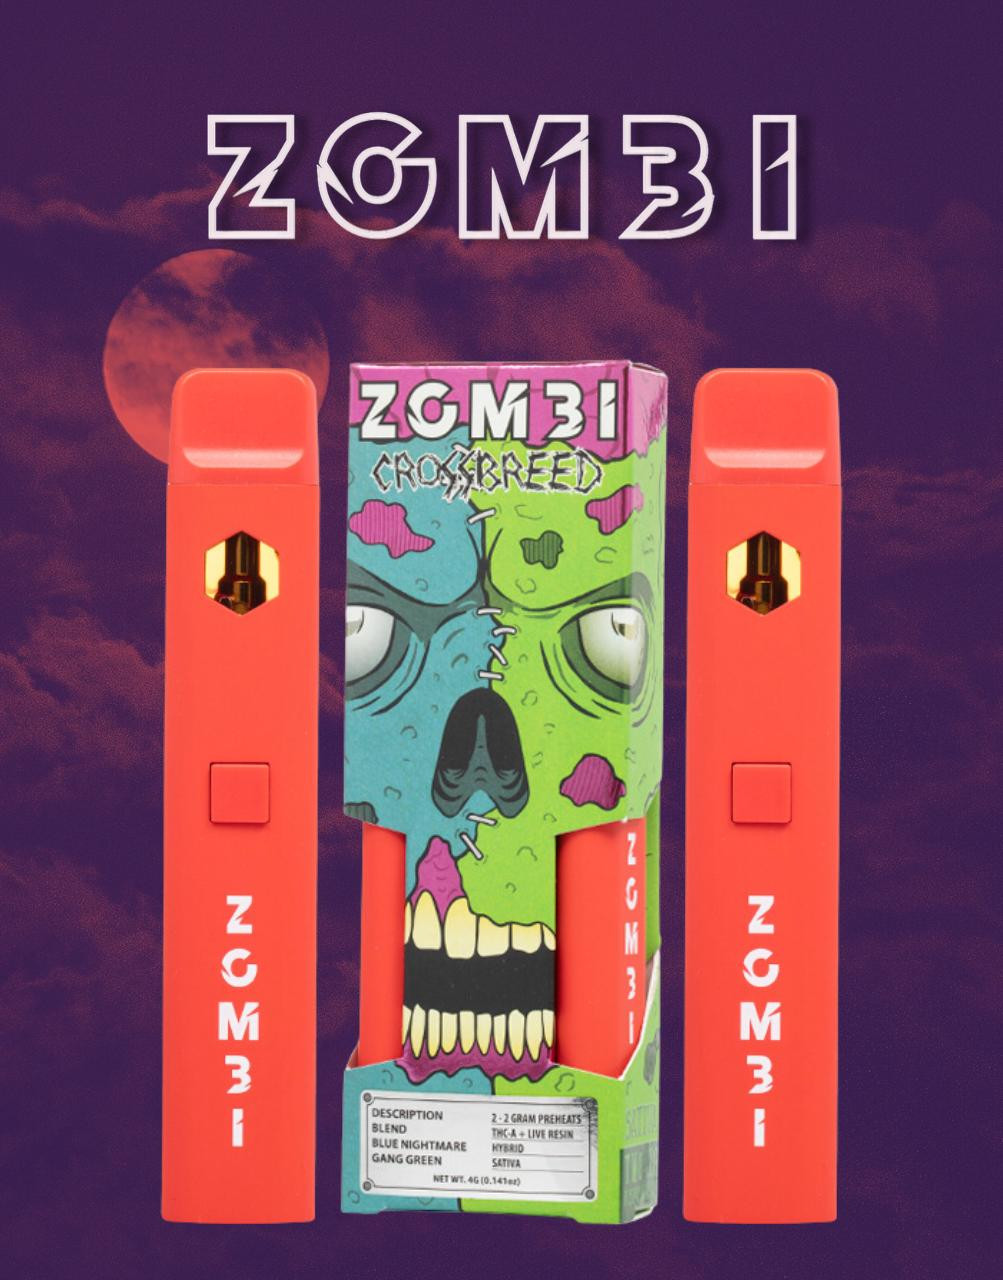 Zombi Apocalypse Blend Delta-6 + THC-P Disposable